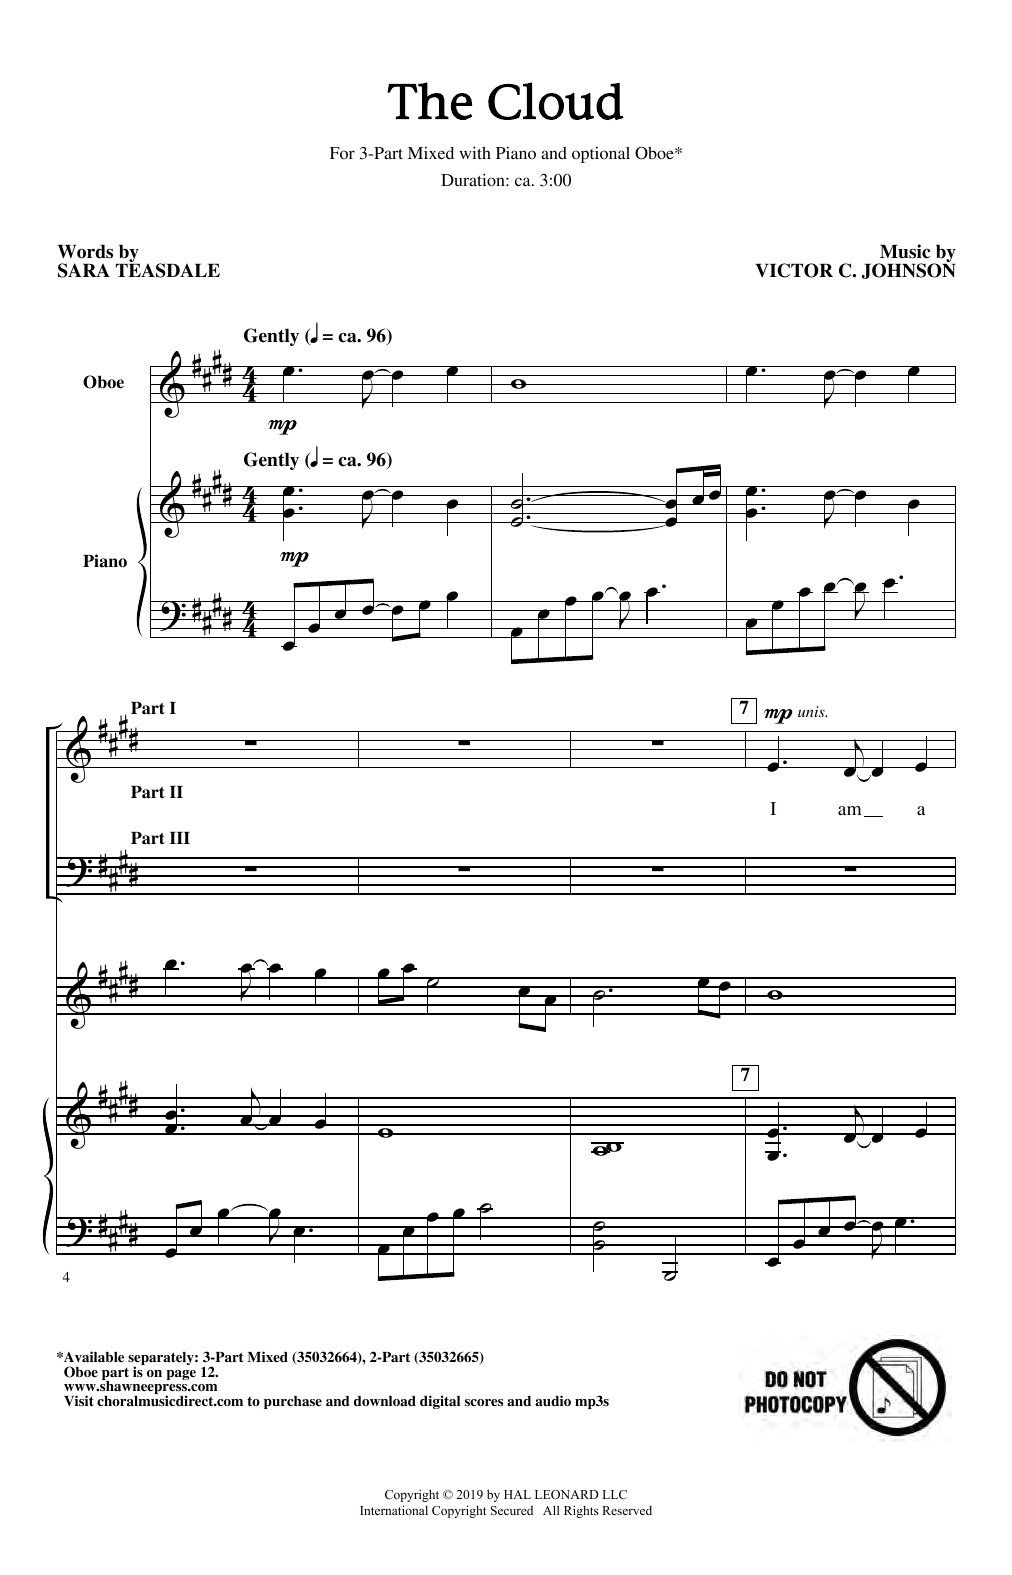 Sara Teasdale & Victor C. Johnson The Cloud Sheet Music Notes & Chords for 2-Part Choir - Download or Print PDF